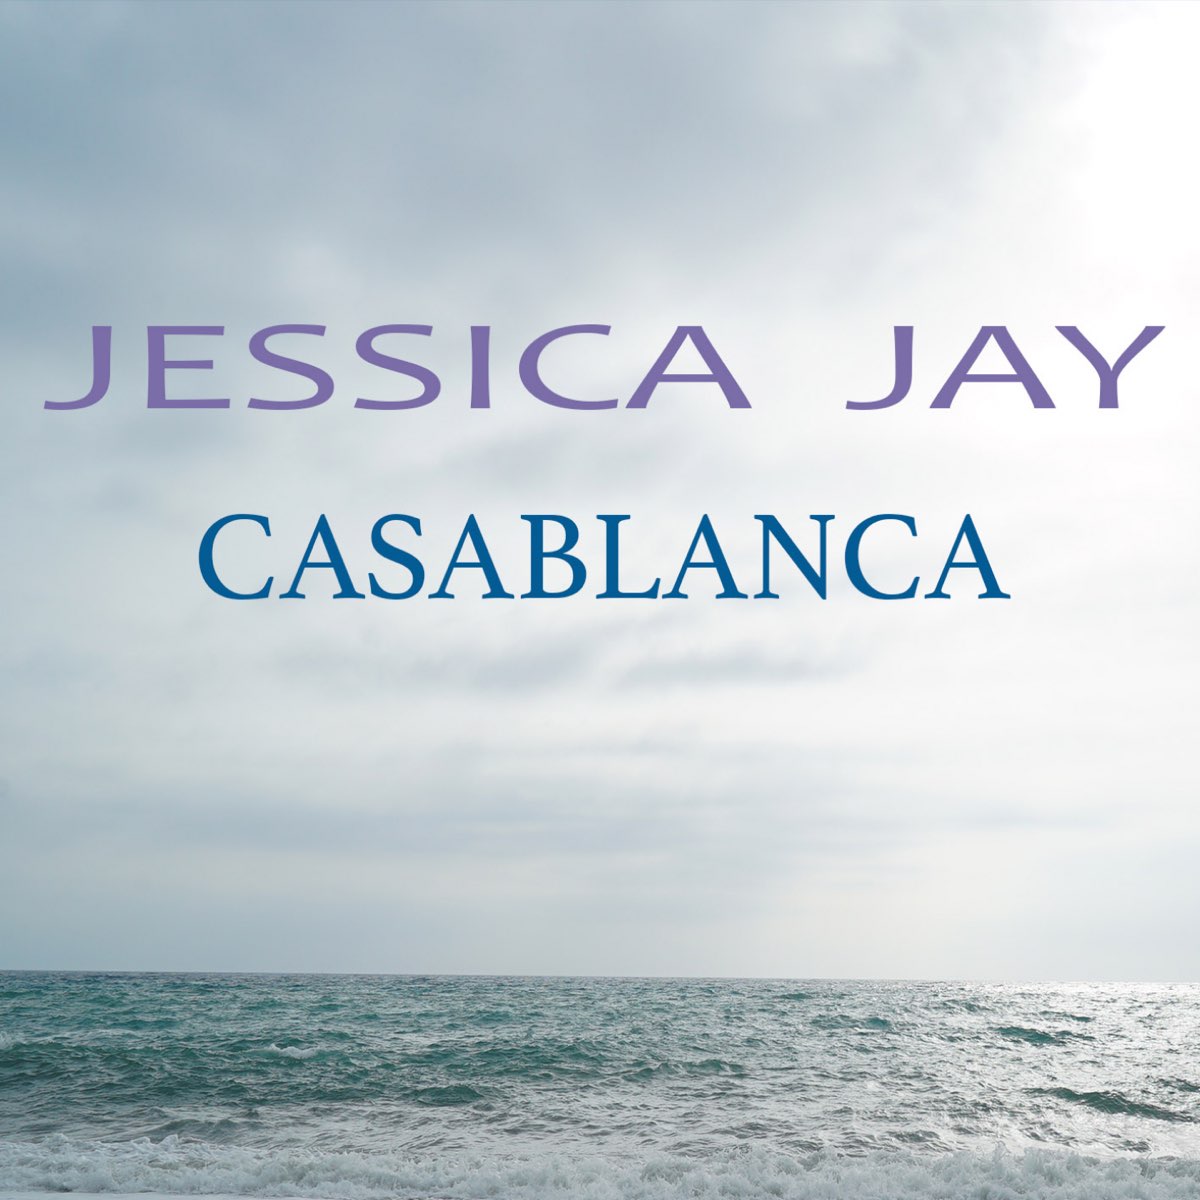 Casablanca remix. Jessica Jay Касабланка. Jessica Jay Casablanca альбом. Jessica Jay певица 90-х.